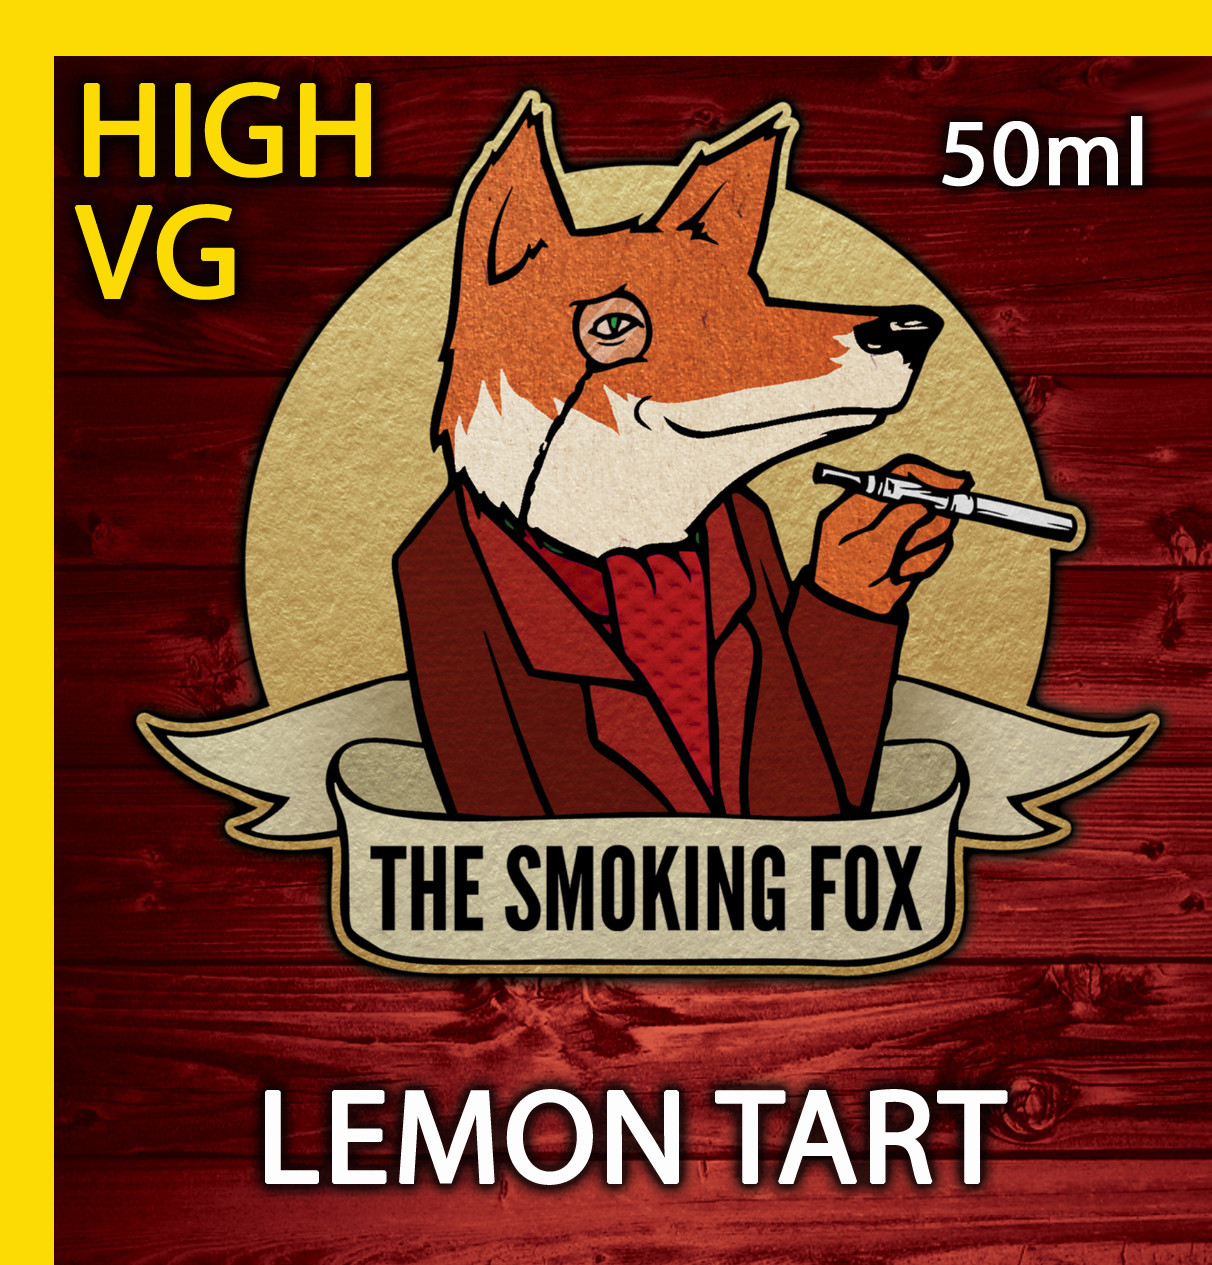 THE SMOKING FOX 50ml HIGH VG - LEMON TART